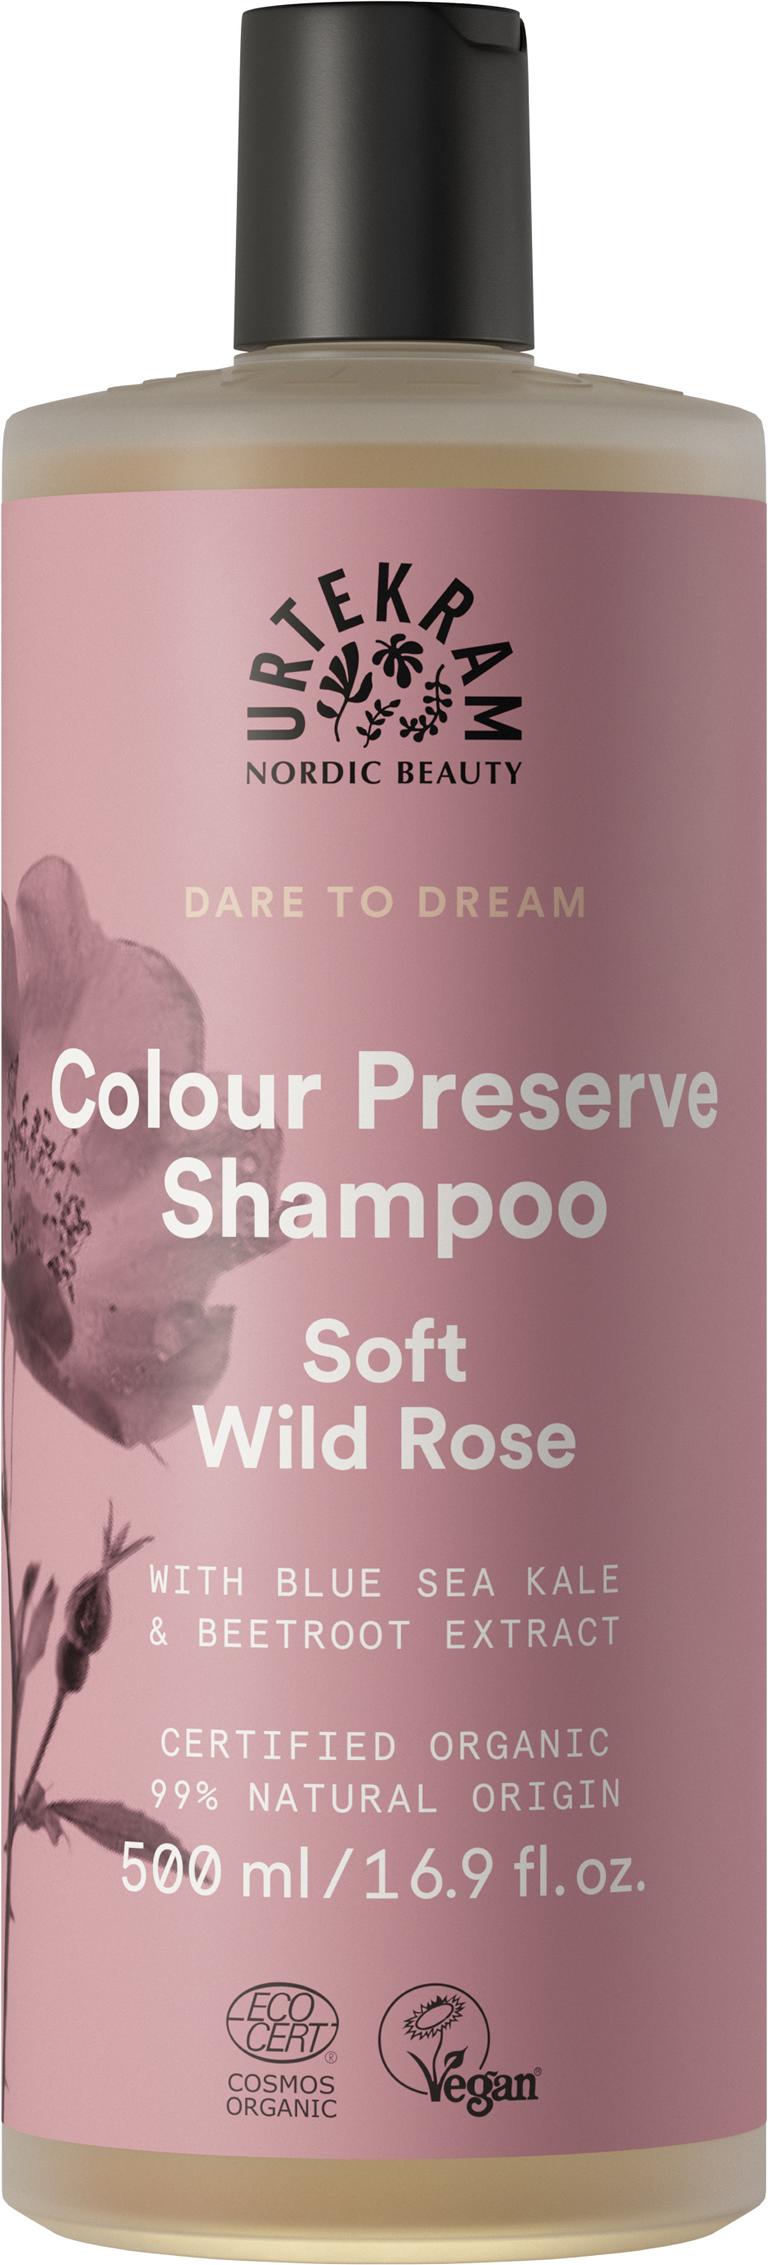 Urtekram Soft Wild Rose Shampoo 500 ml